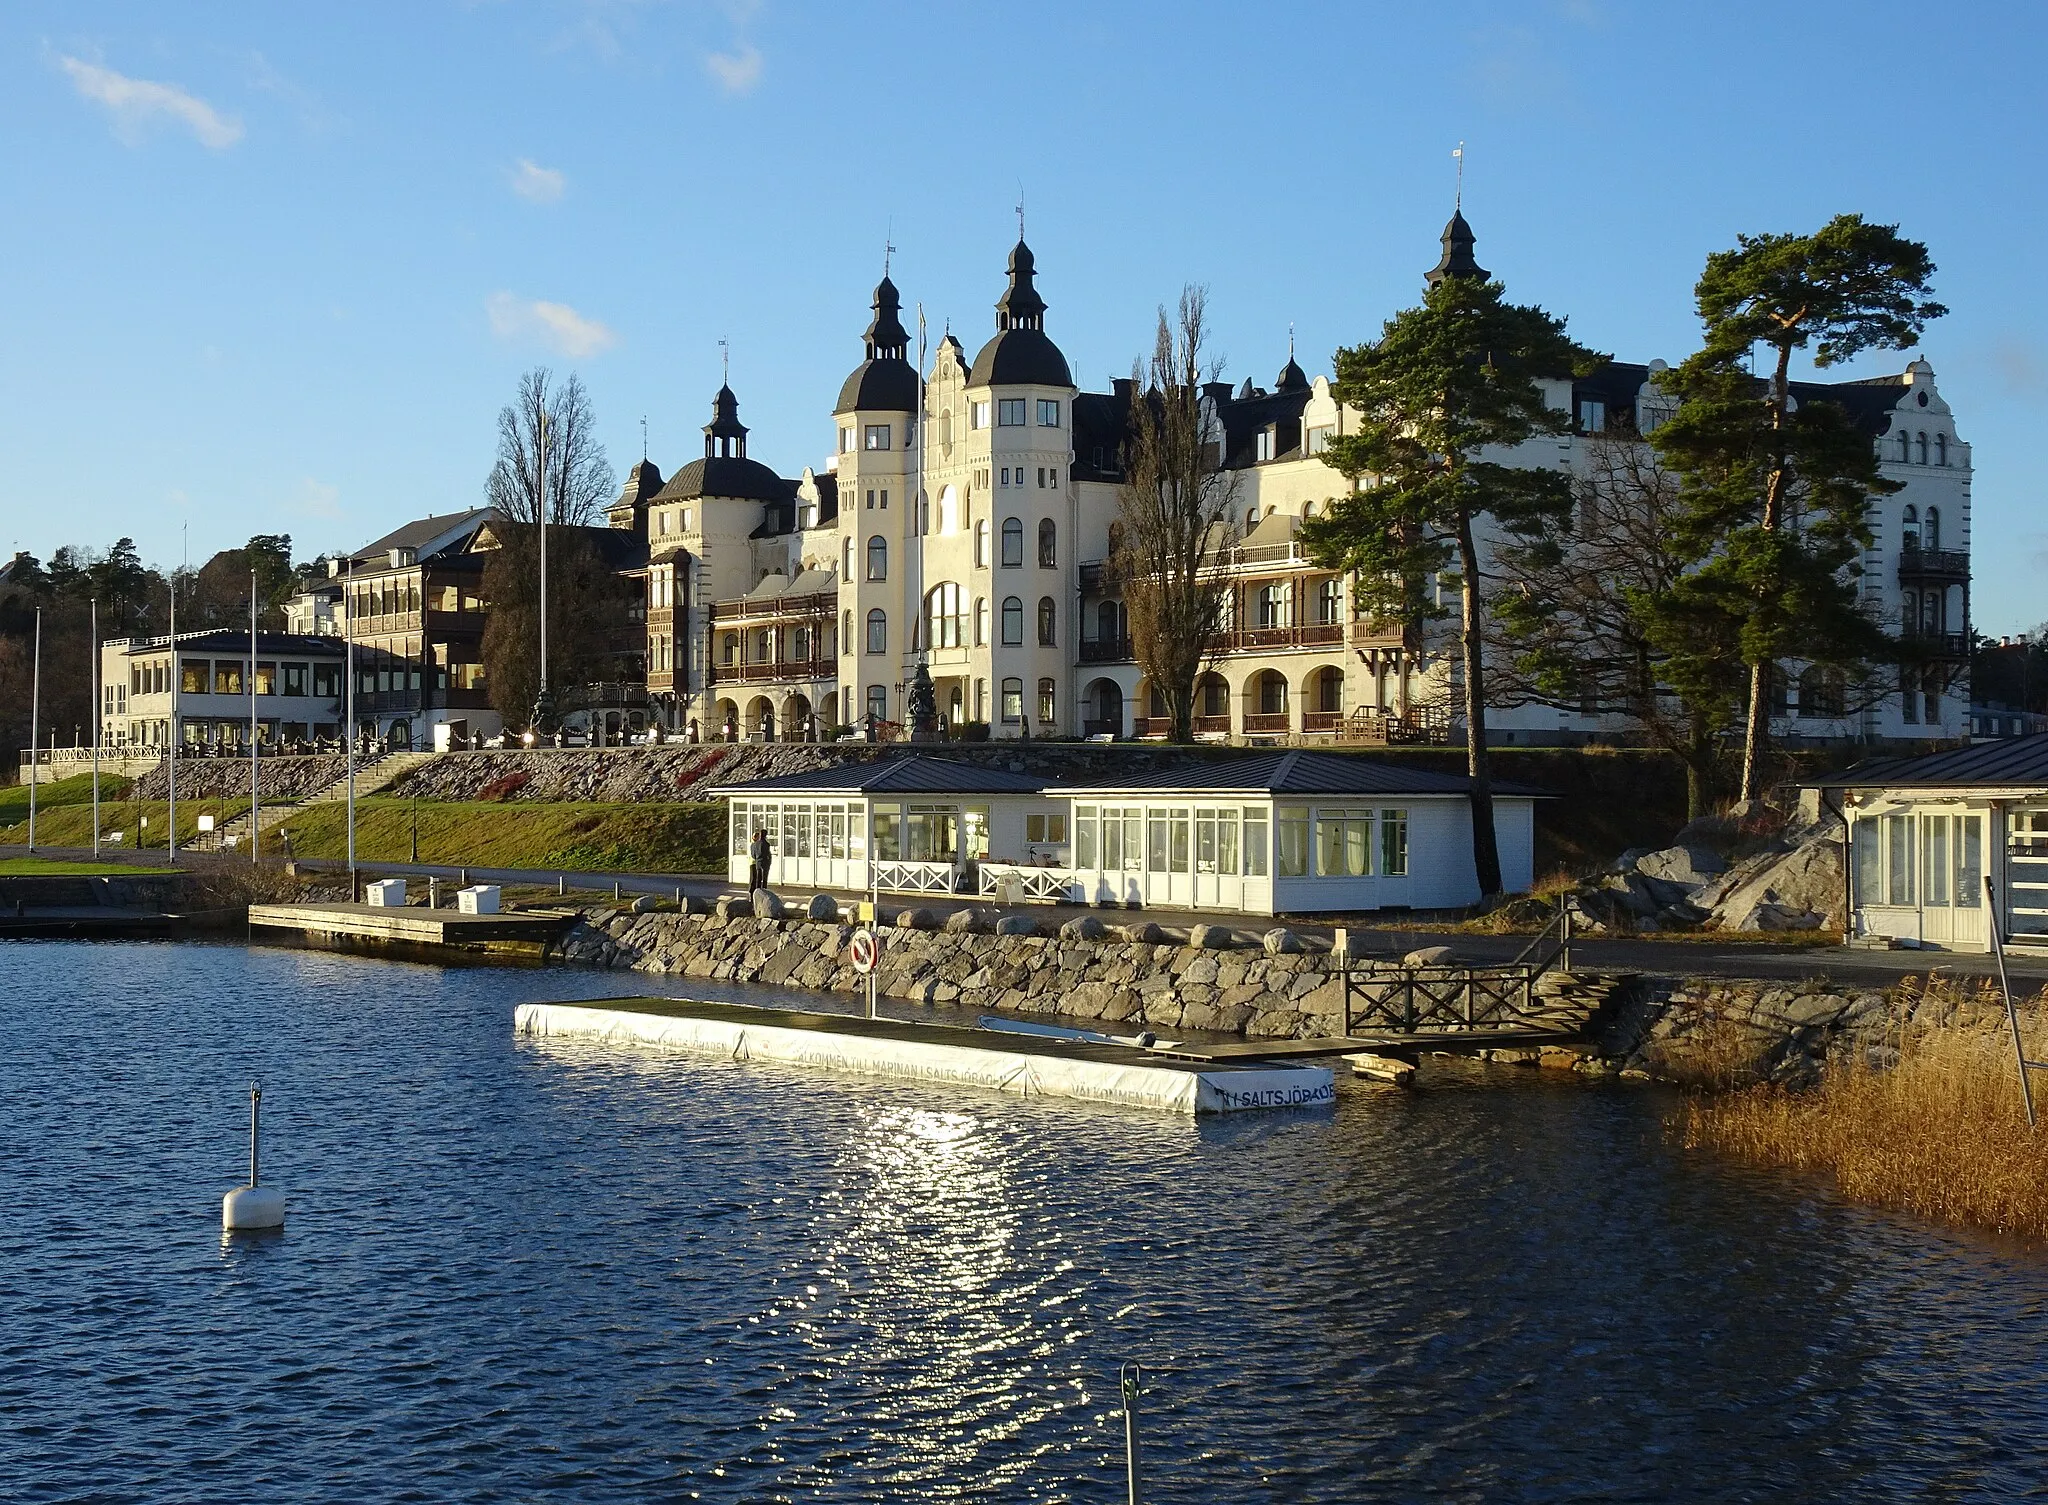 Image of Stockholm